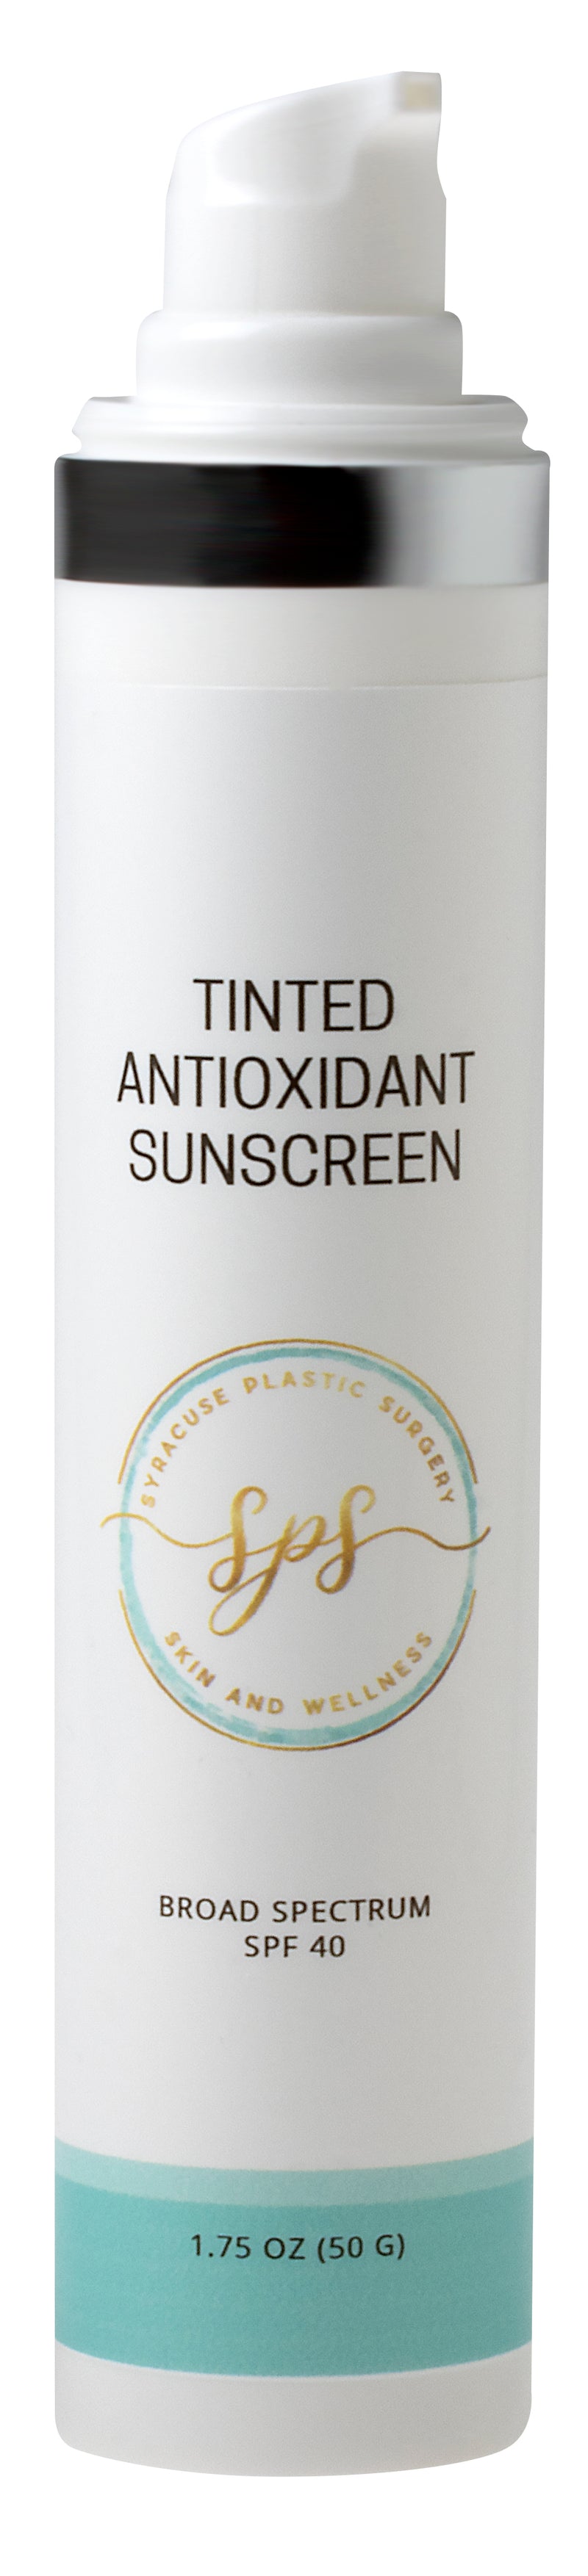 SPS Tinted Antioxidant Sunscreen